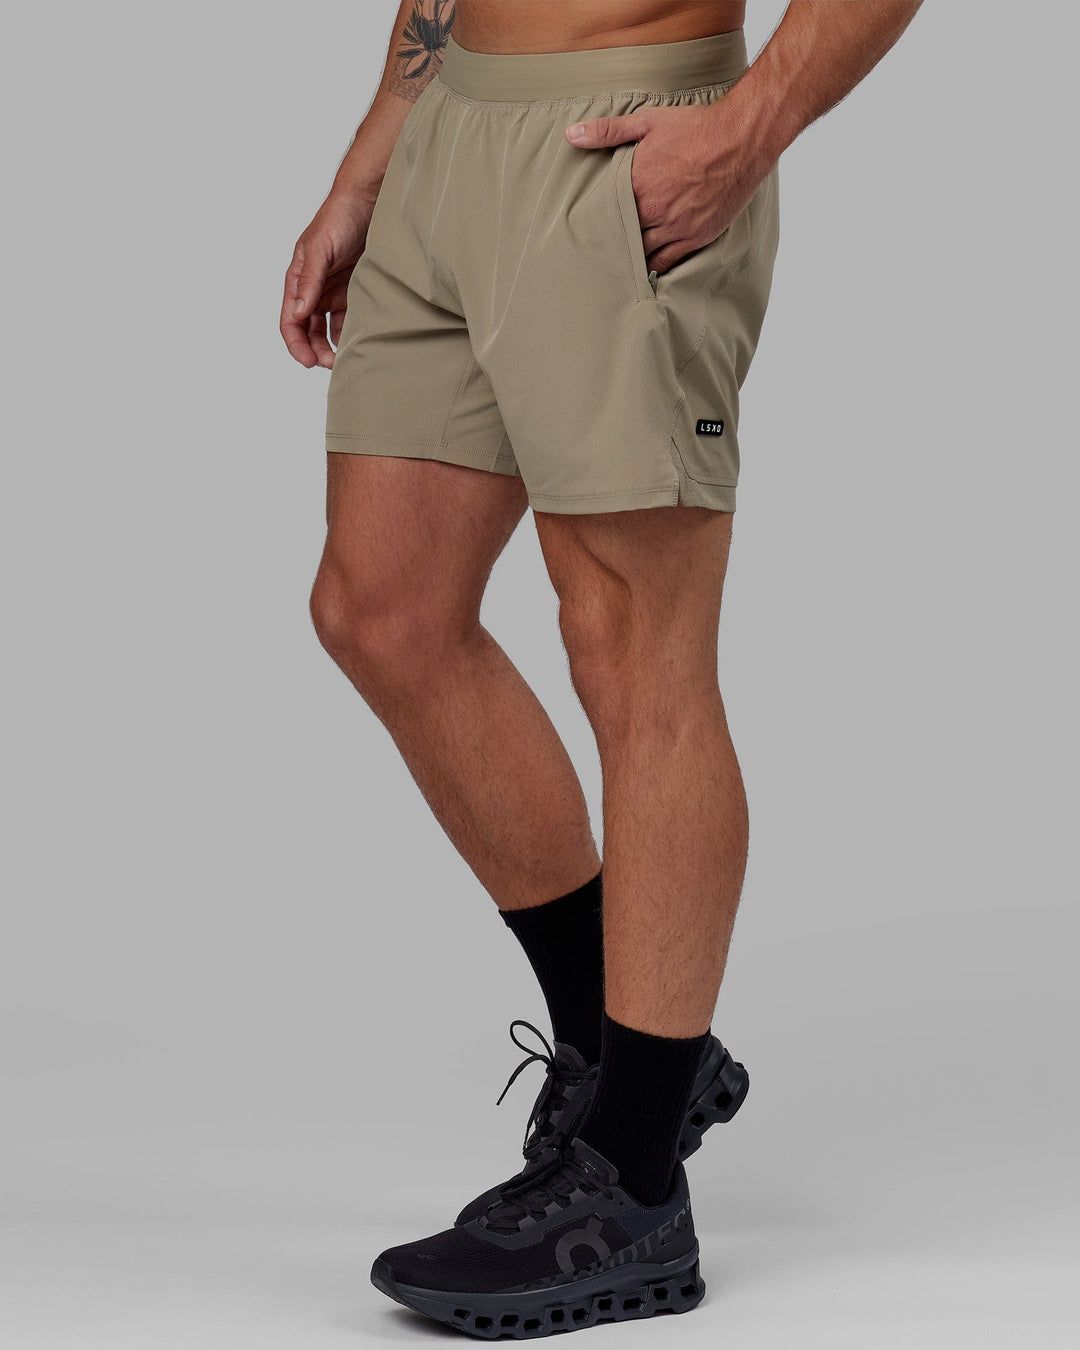 Man wearing Challenger 6" Performance Short Linerless - Laurel Oak